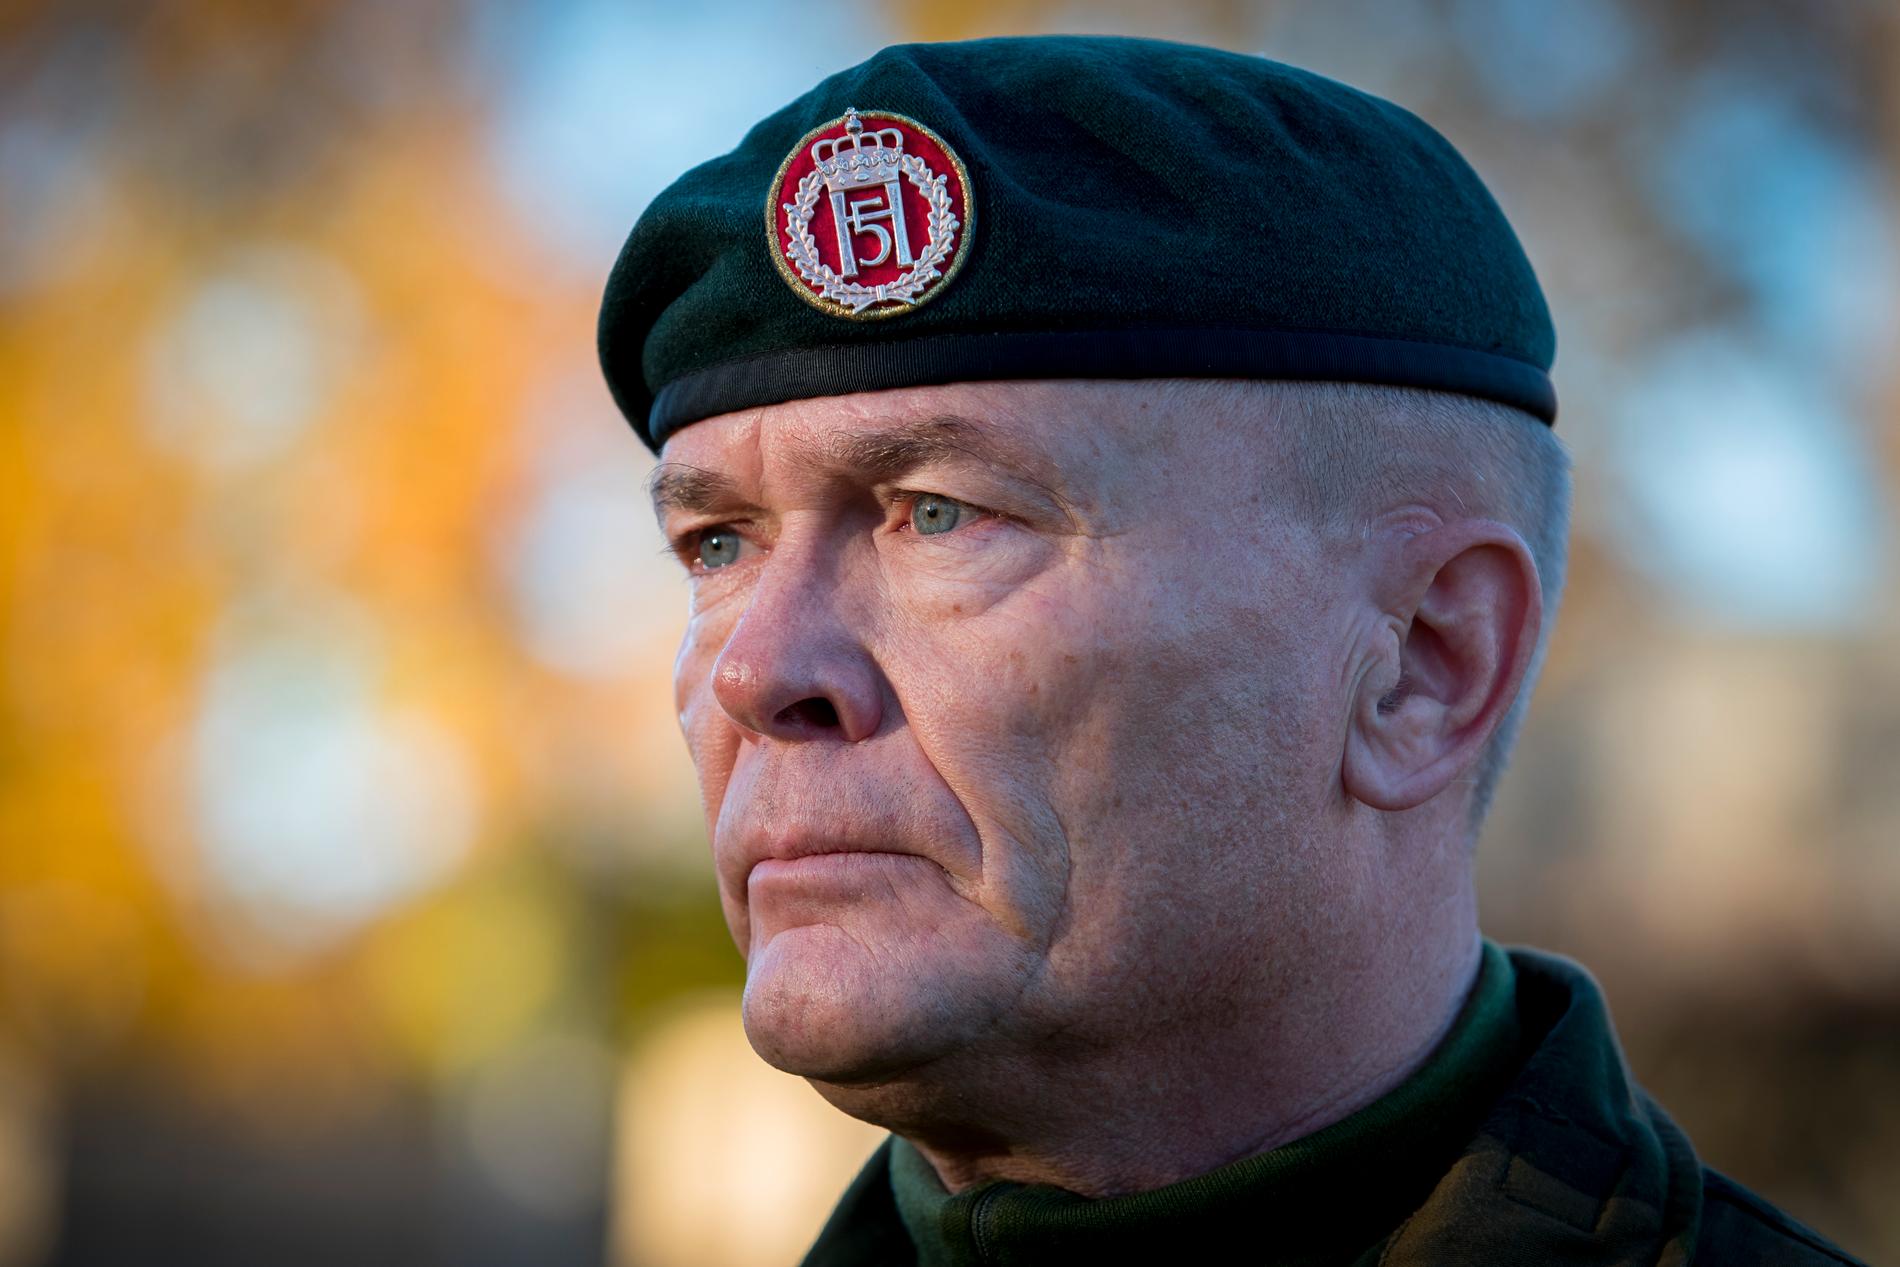 DØDSULYKKEN: – Dette er en tung dag i Hæren, sier sjef for Hæren, generalmajor Odin Johannessen.